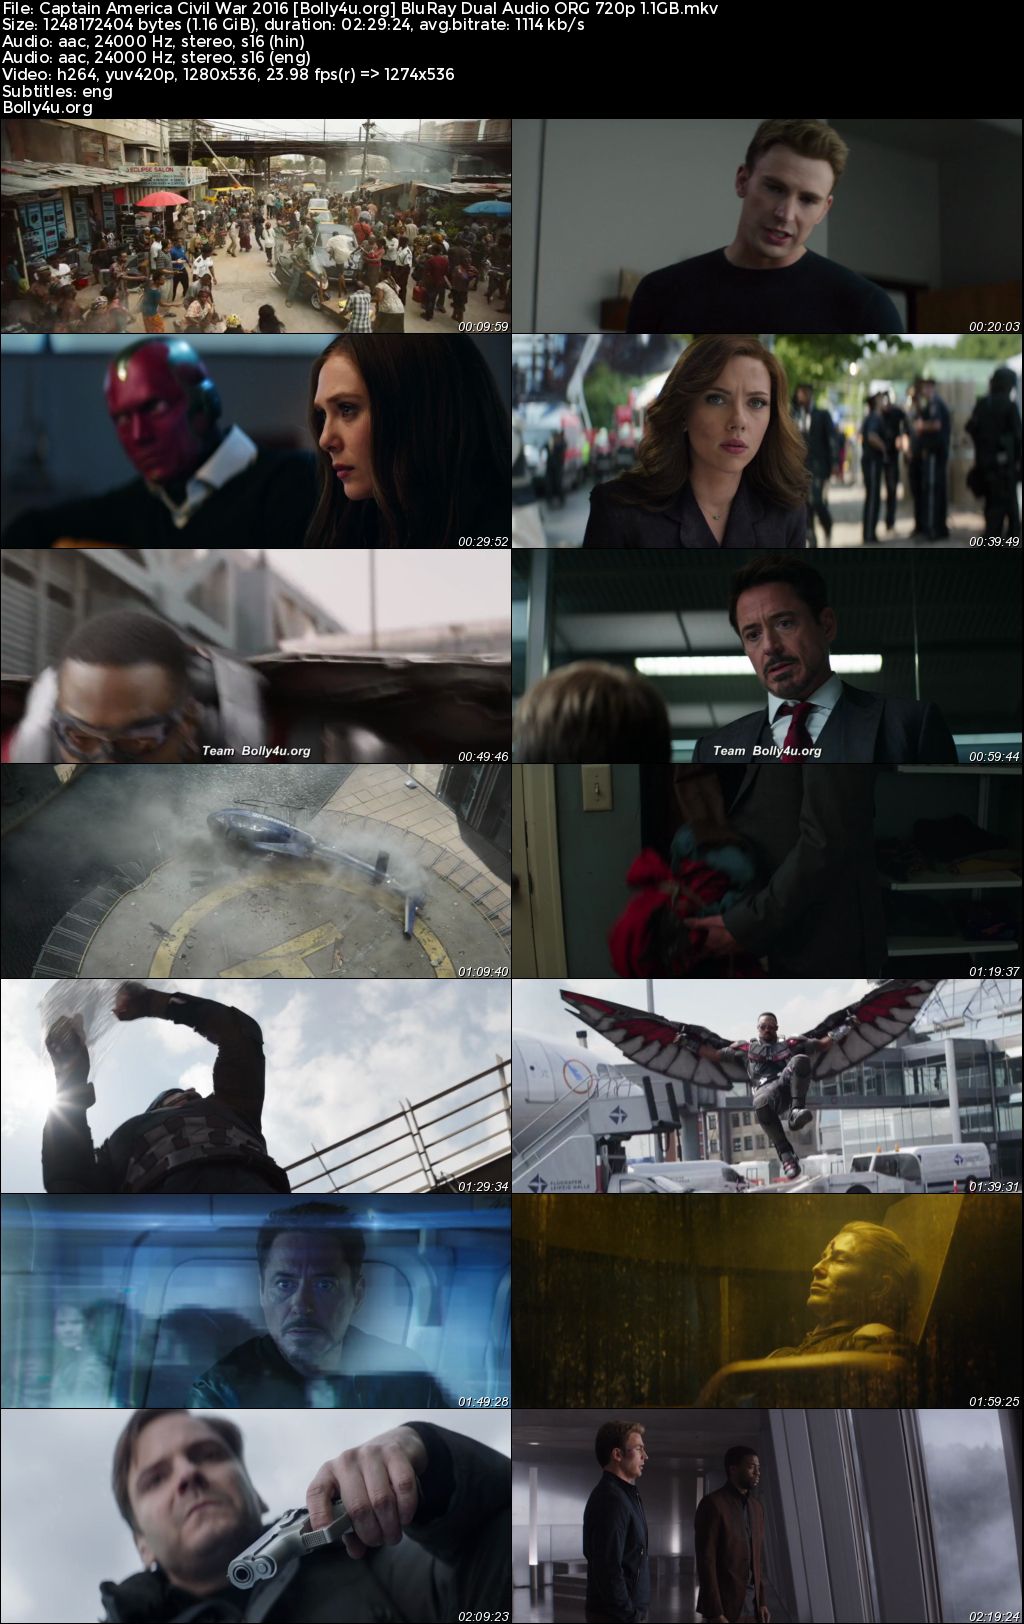 Captain America Civil War 2016 BluRay Hindi Dual Audio ORG Full Movie Download 1080p 720p 480p